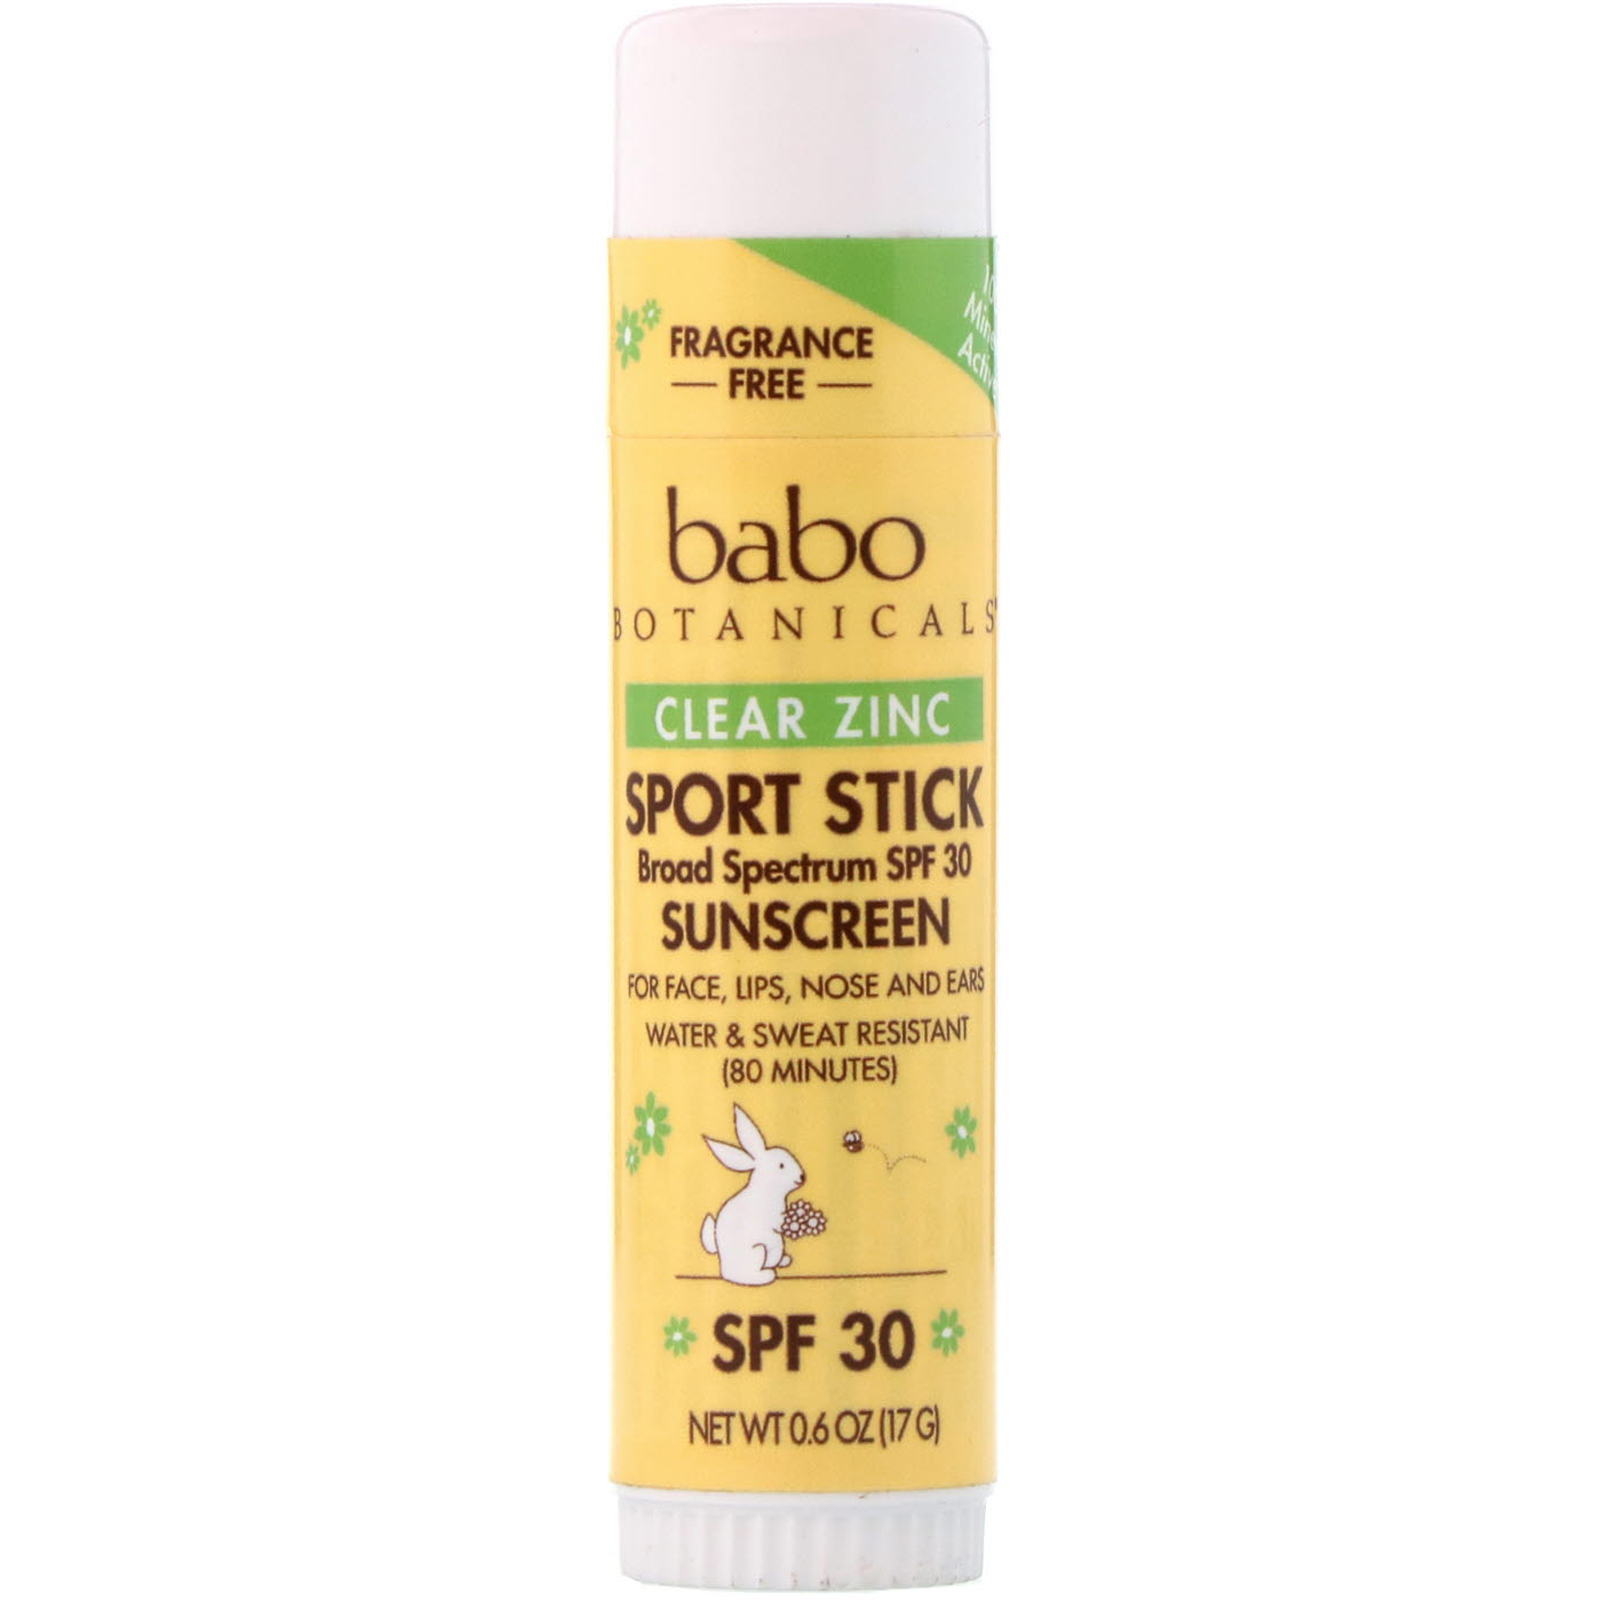 babo botanicals sport stick